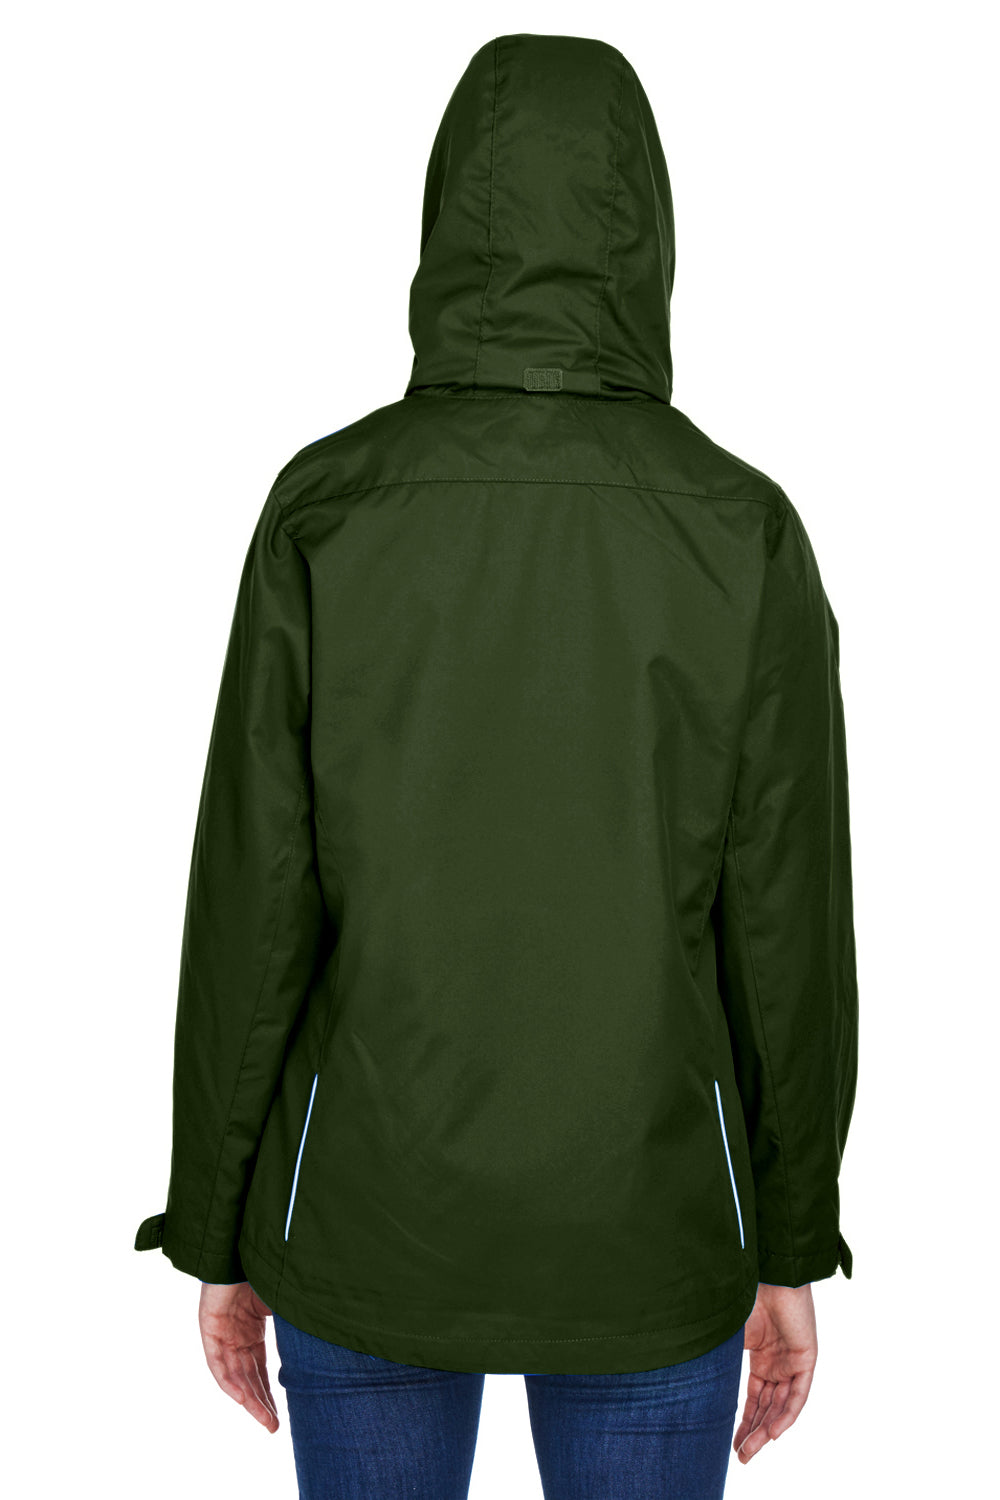 Core 365 78205 Womens Region 3-in-1 Water Resistant Full Zip Hooded Jacket Forest Green Back